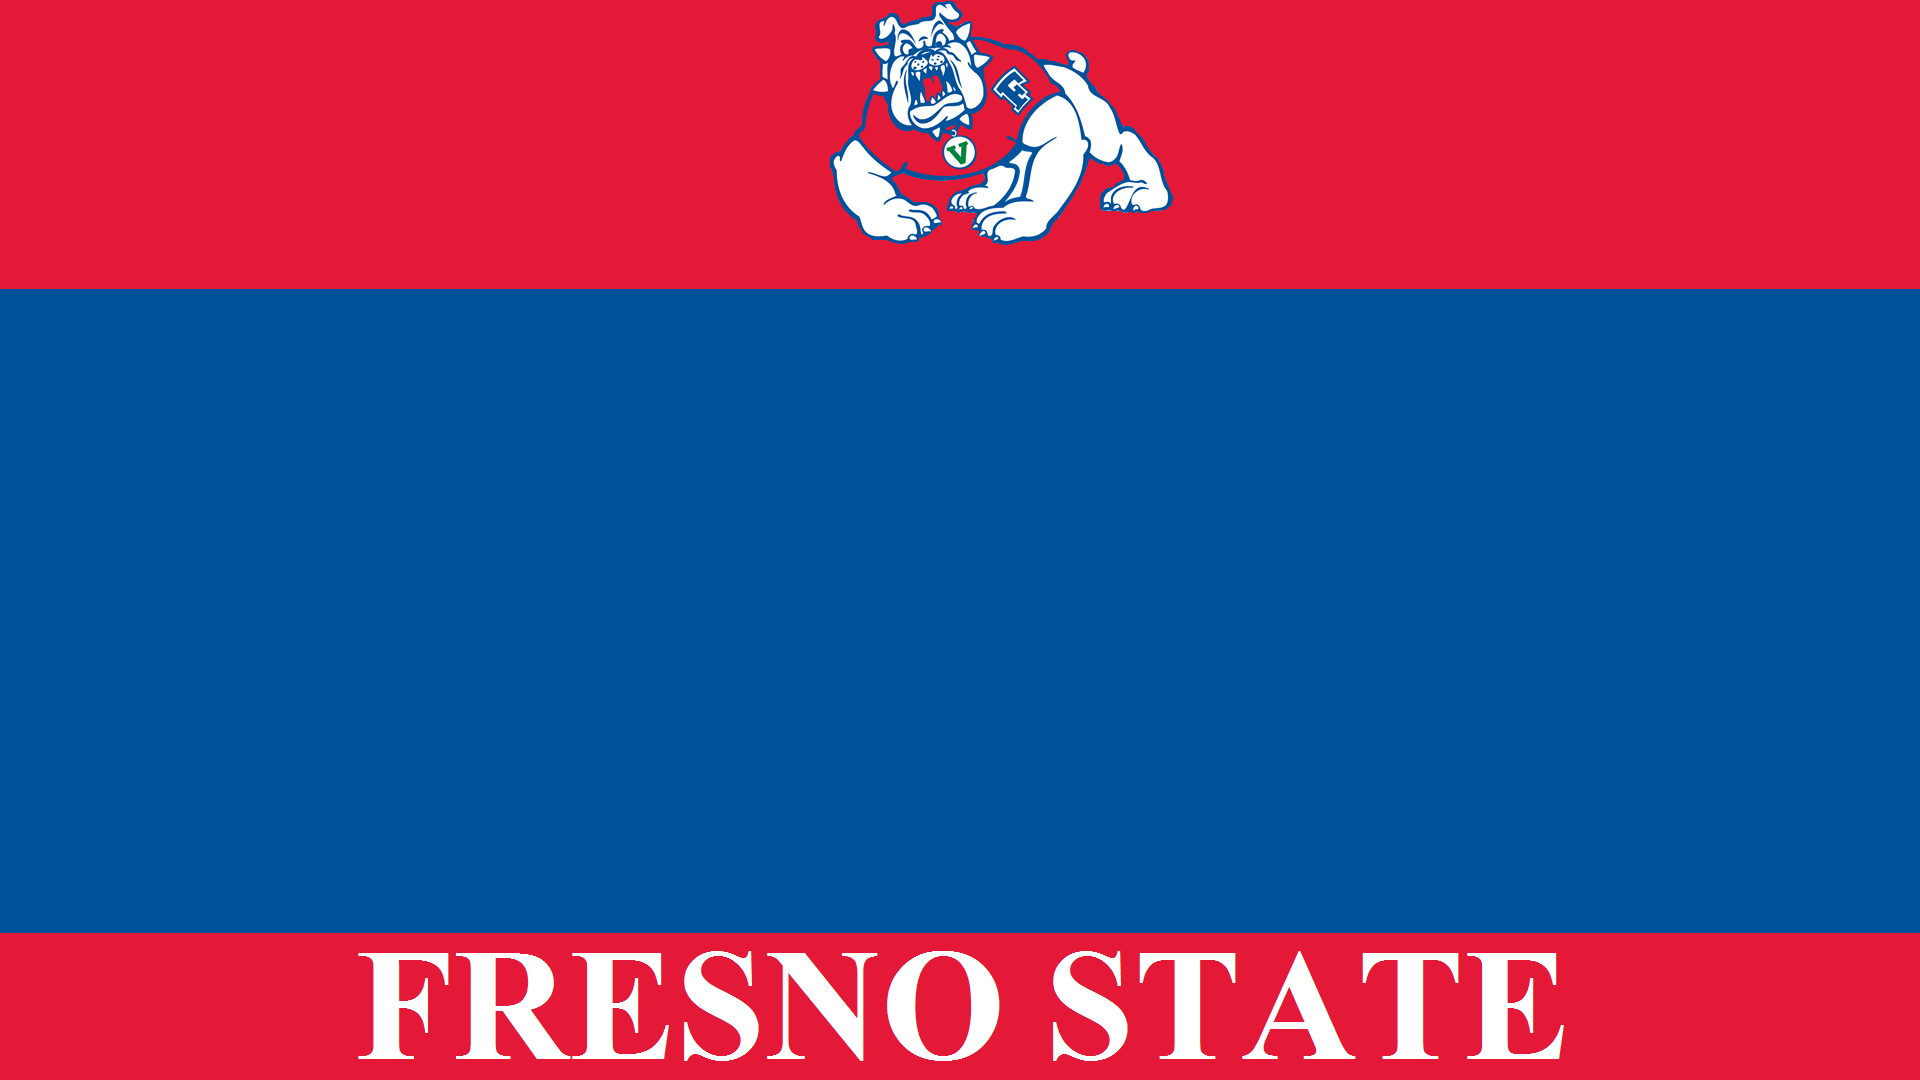 Fresno state wallpaper